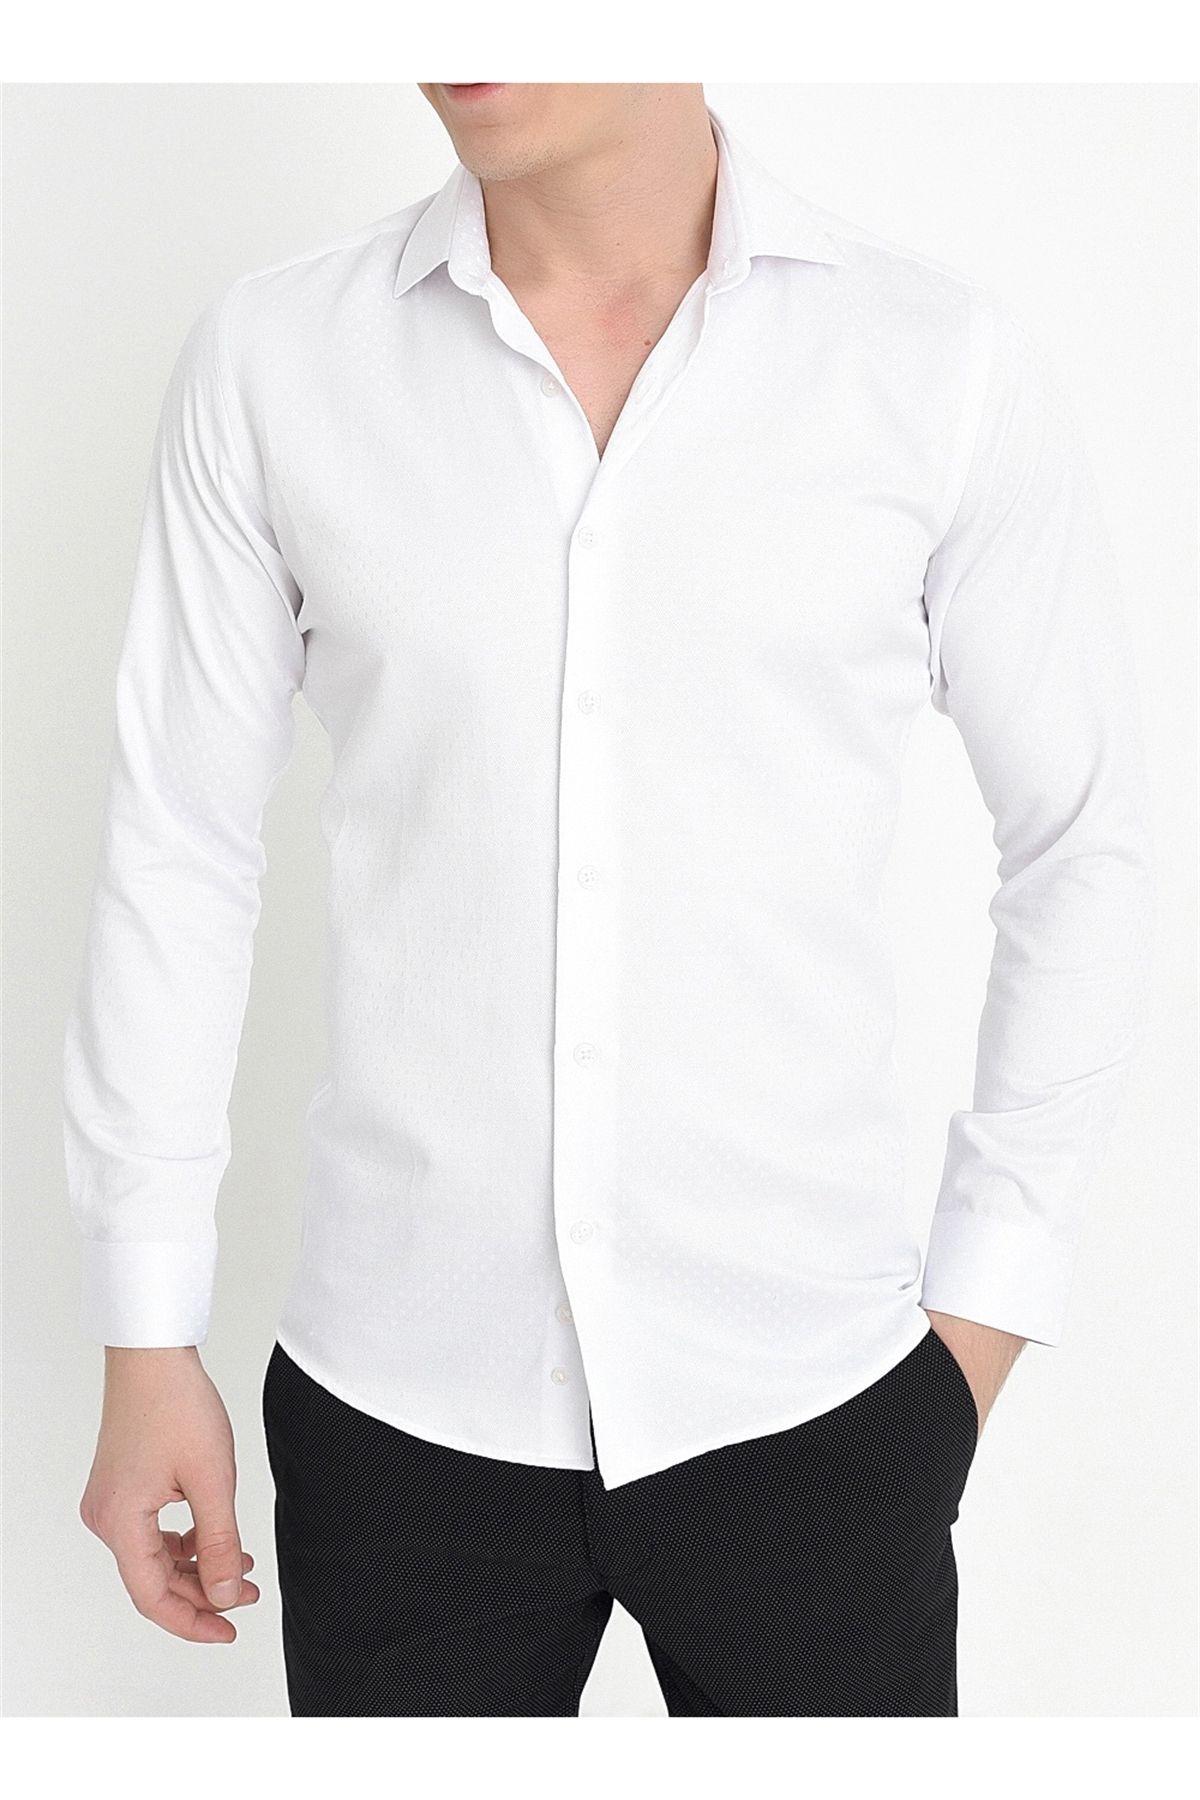 Efor Gk 571 Slim Fit Beyaz Klasik Gömlek